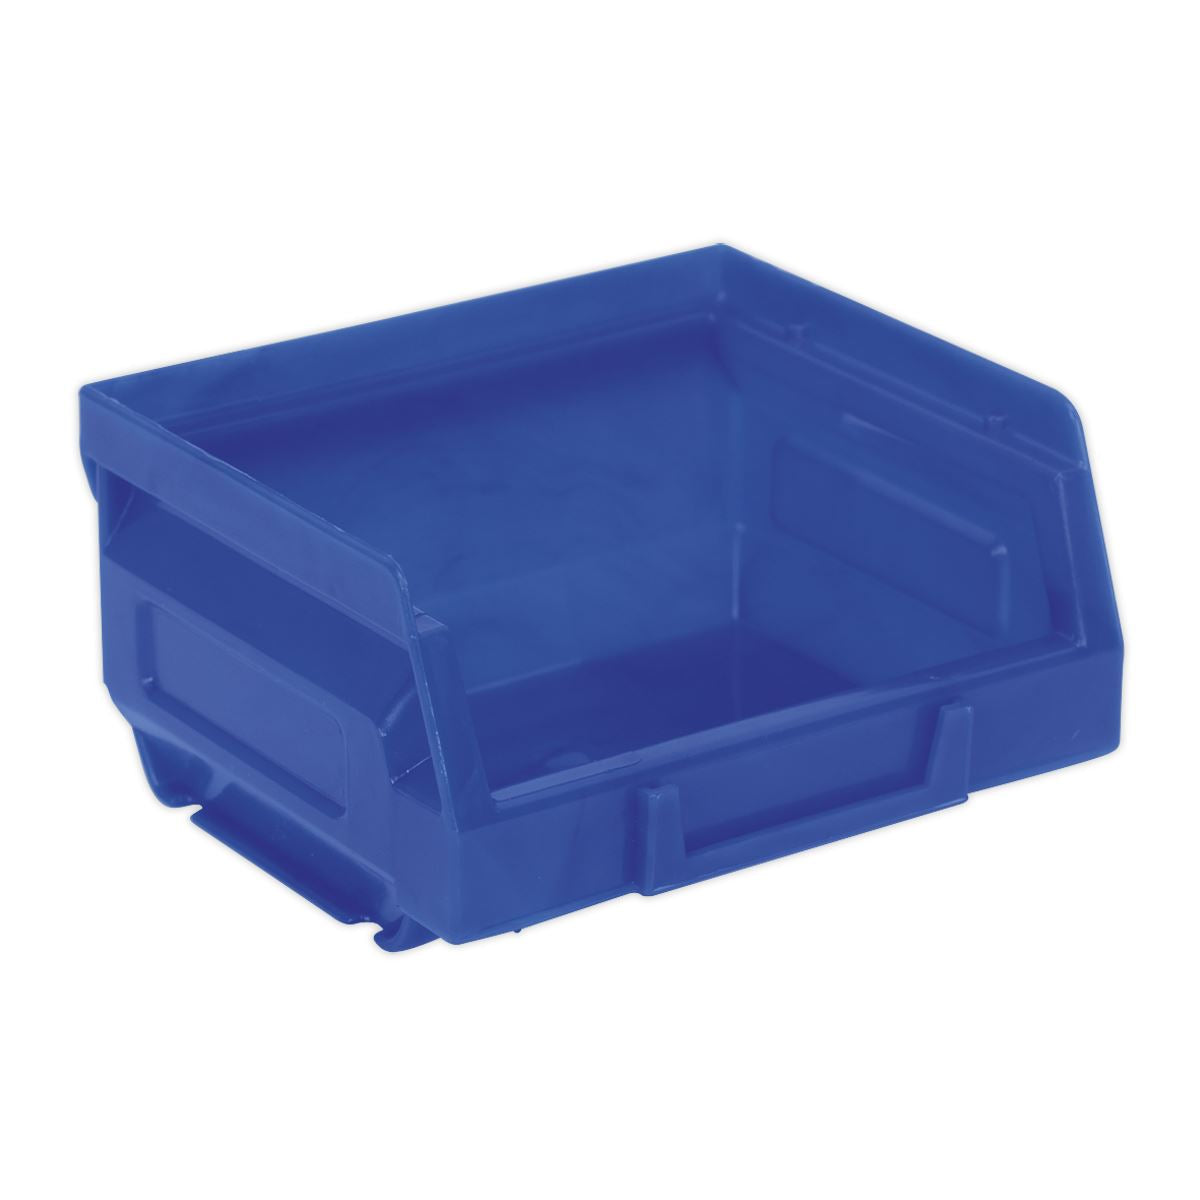 Sealey Plastic Storage Bin 105 x 85 x 55mm - Blue Pack of 24